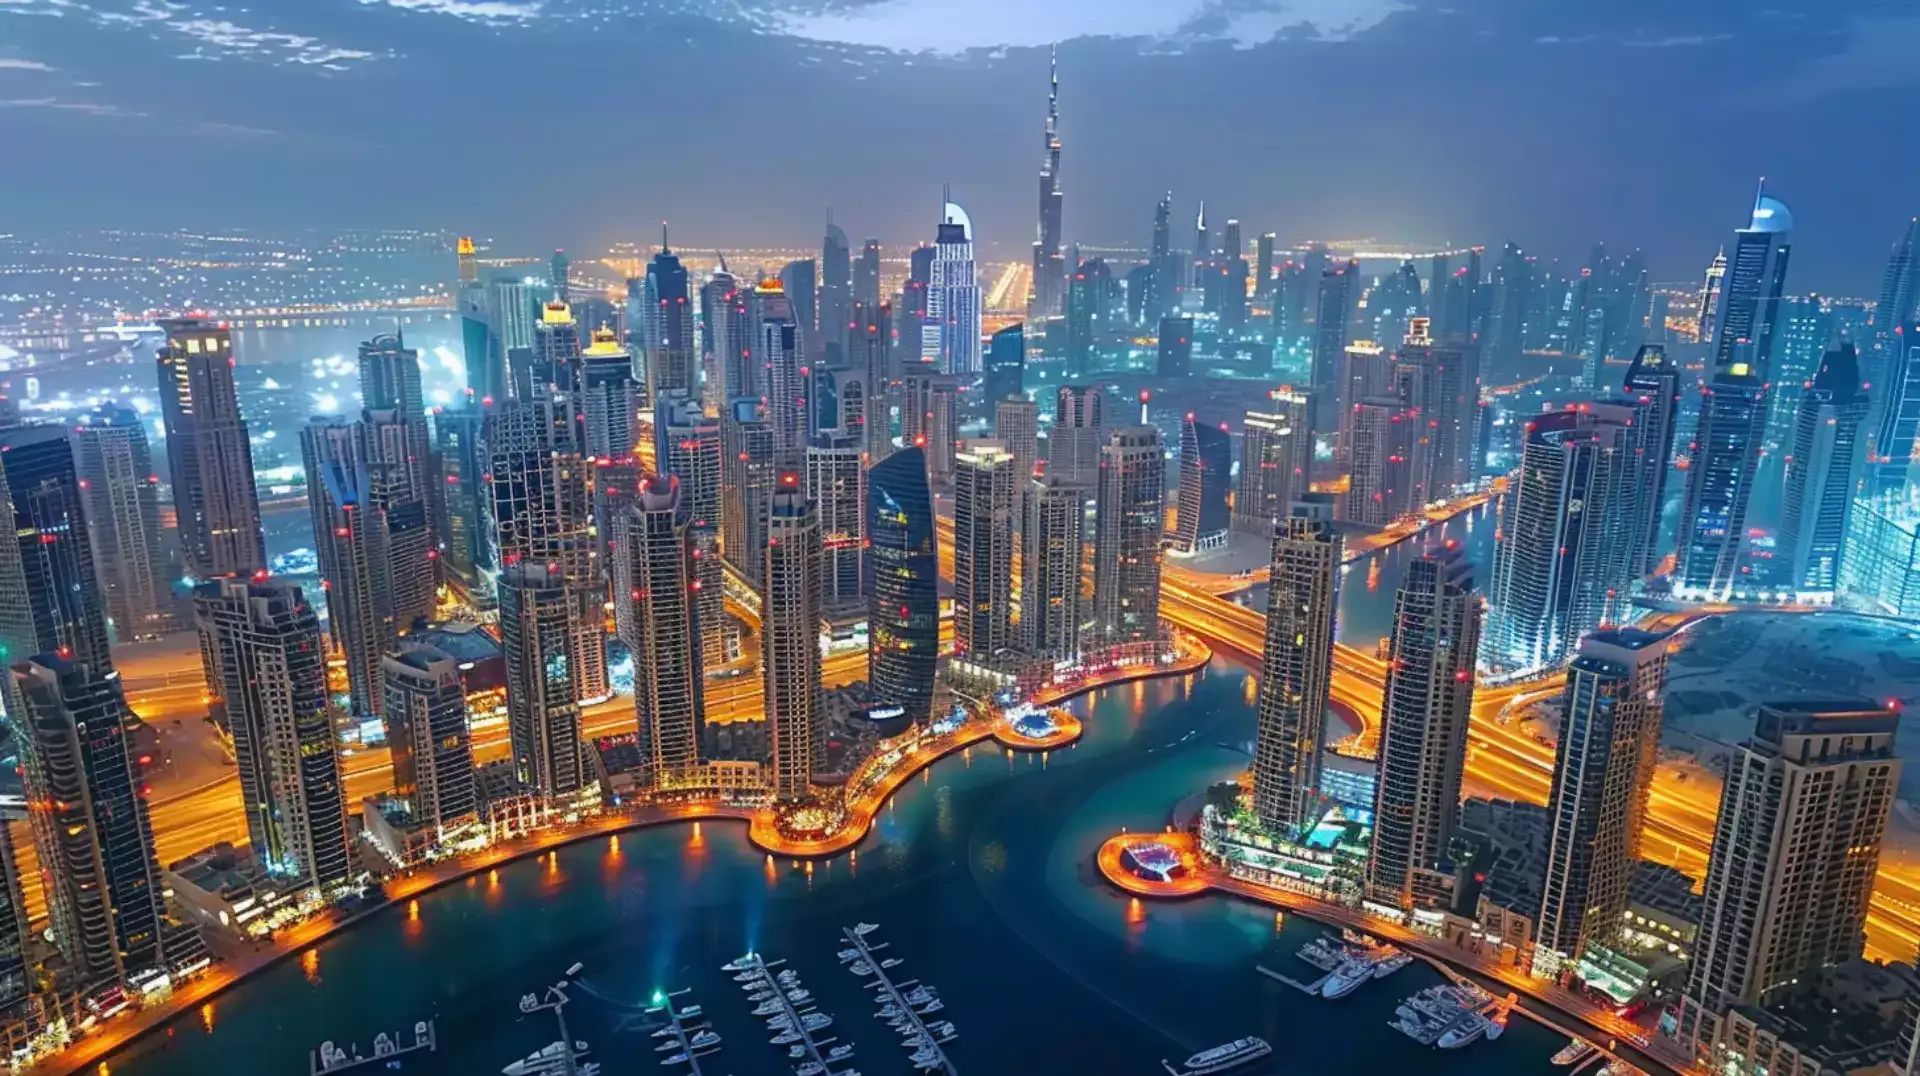 Illustration depicting the evolving market trends driving Dubai's economic growth